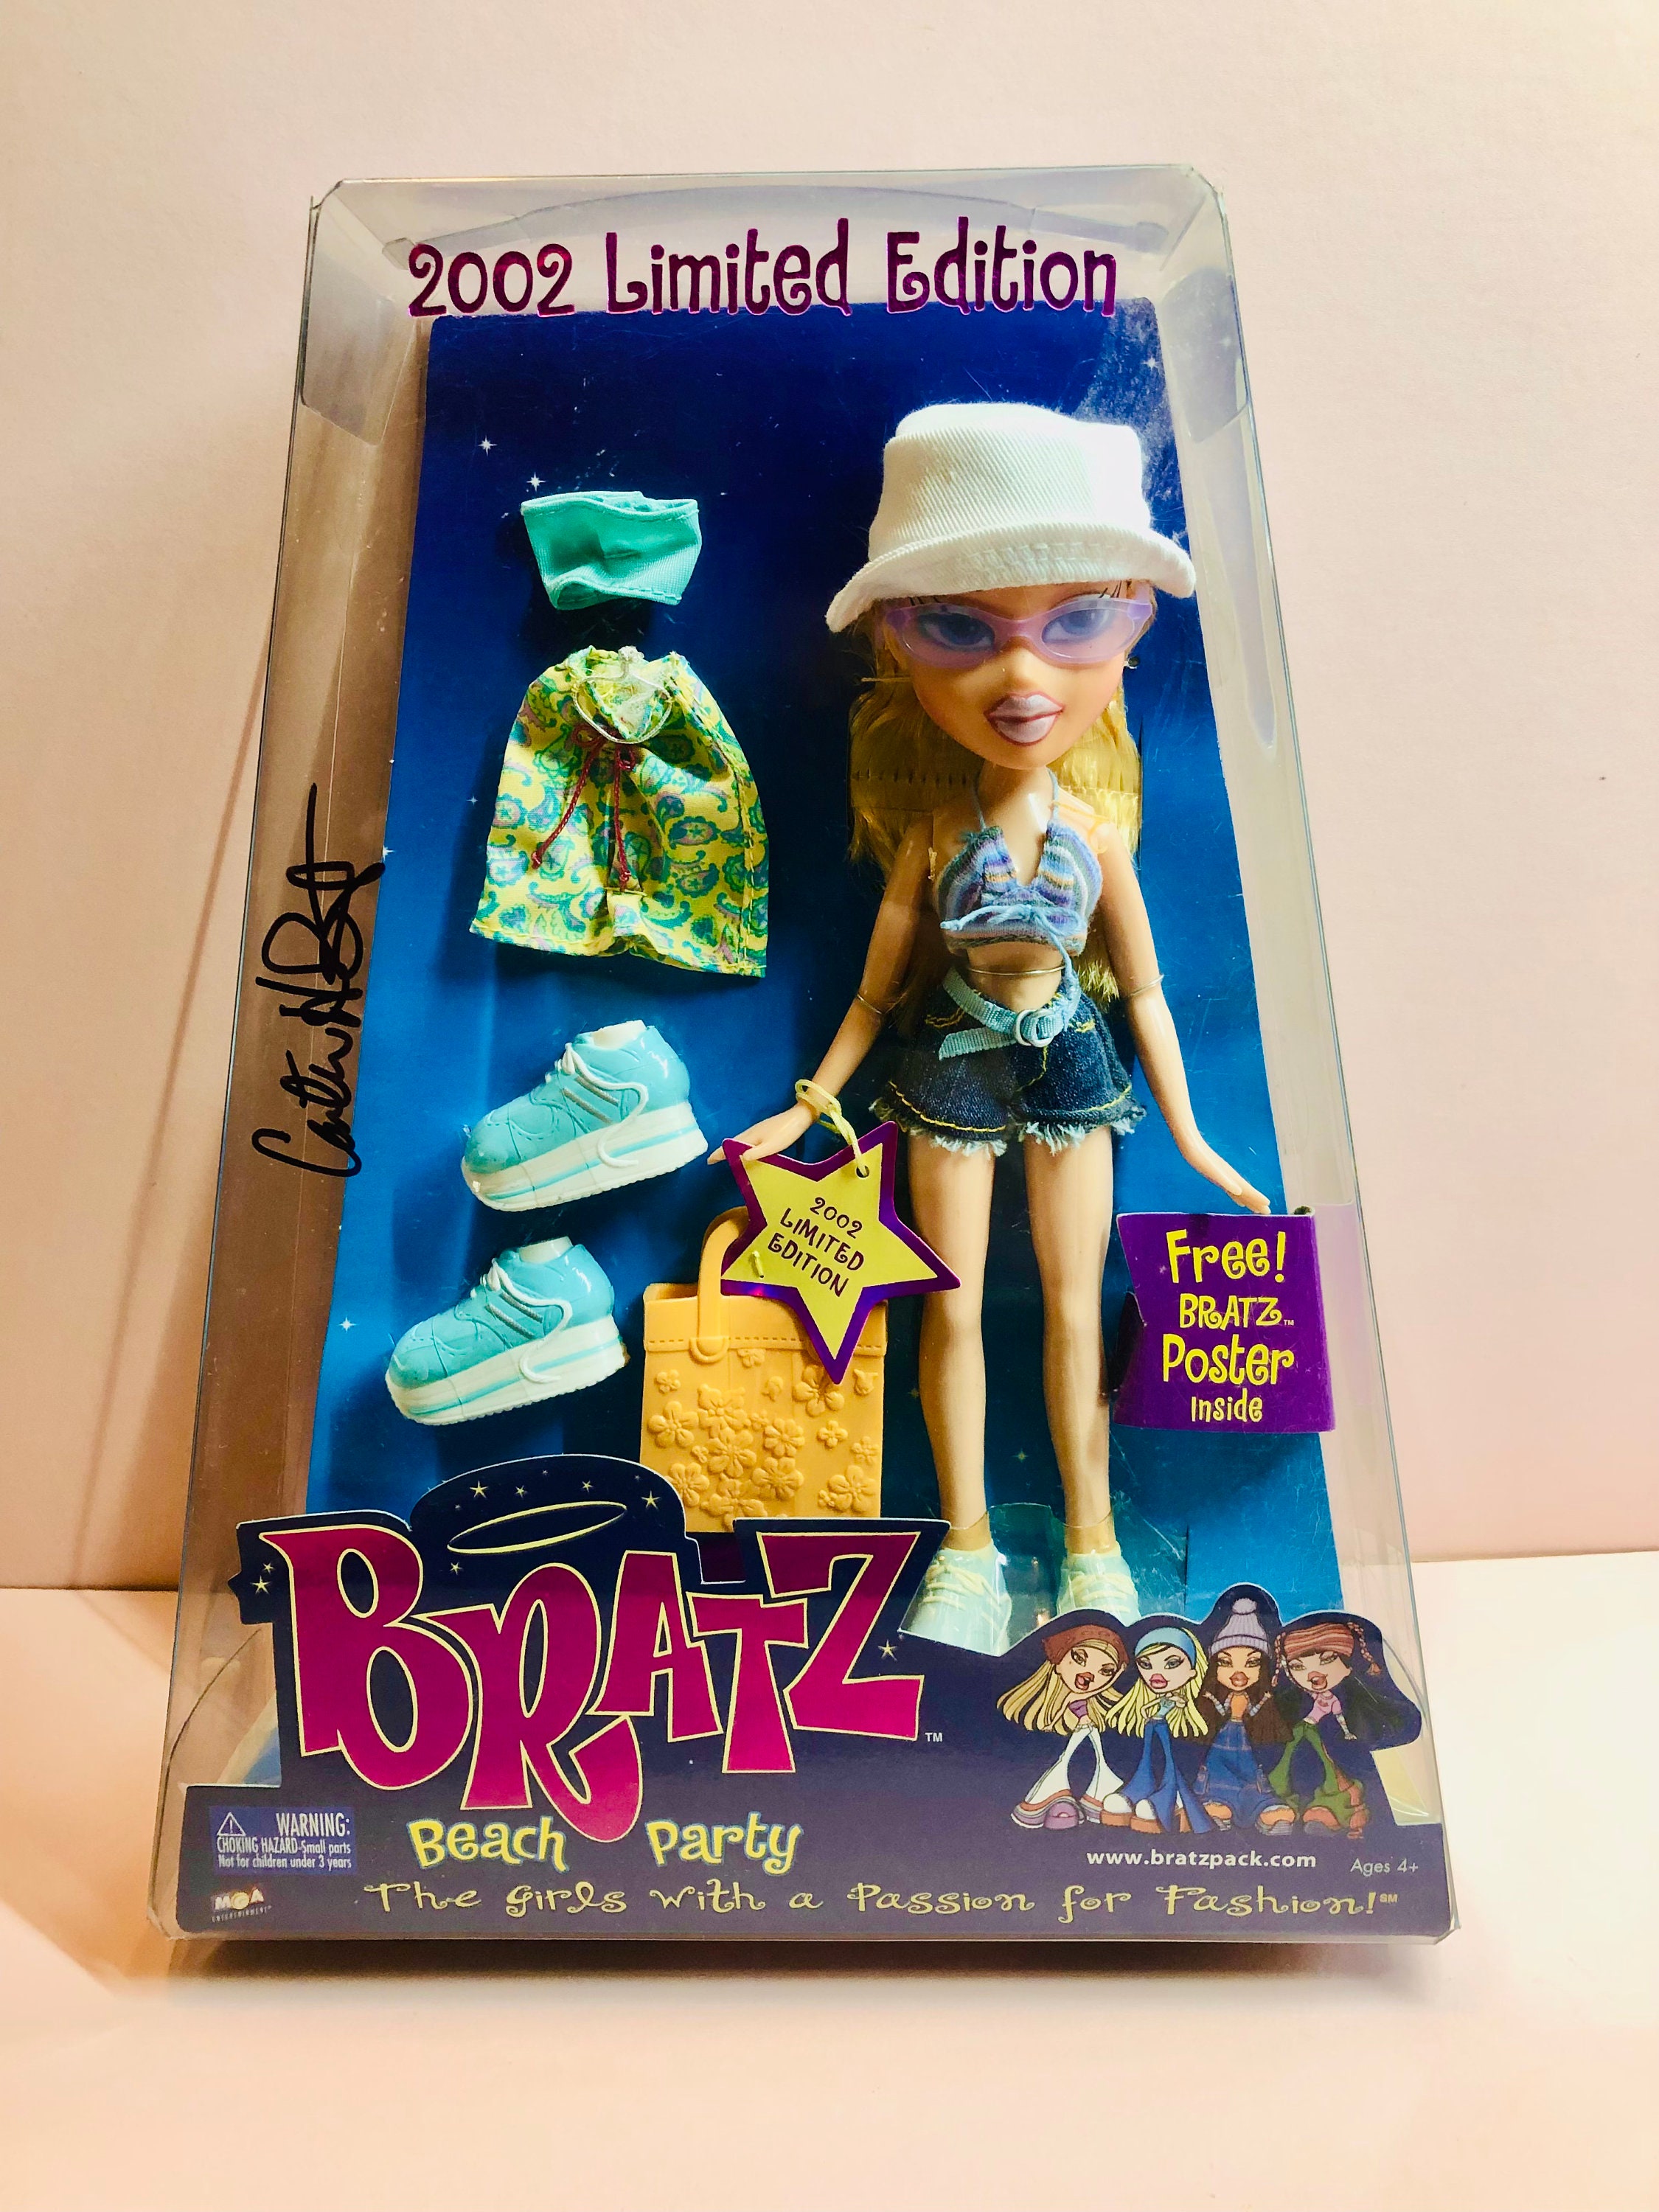 Bratz Beach Party Cloe Original 2002 Edition. Autographed by Bratz